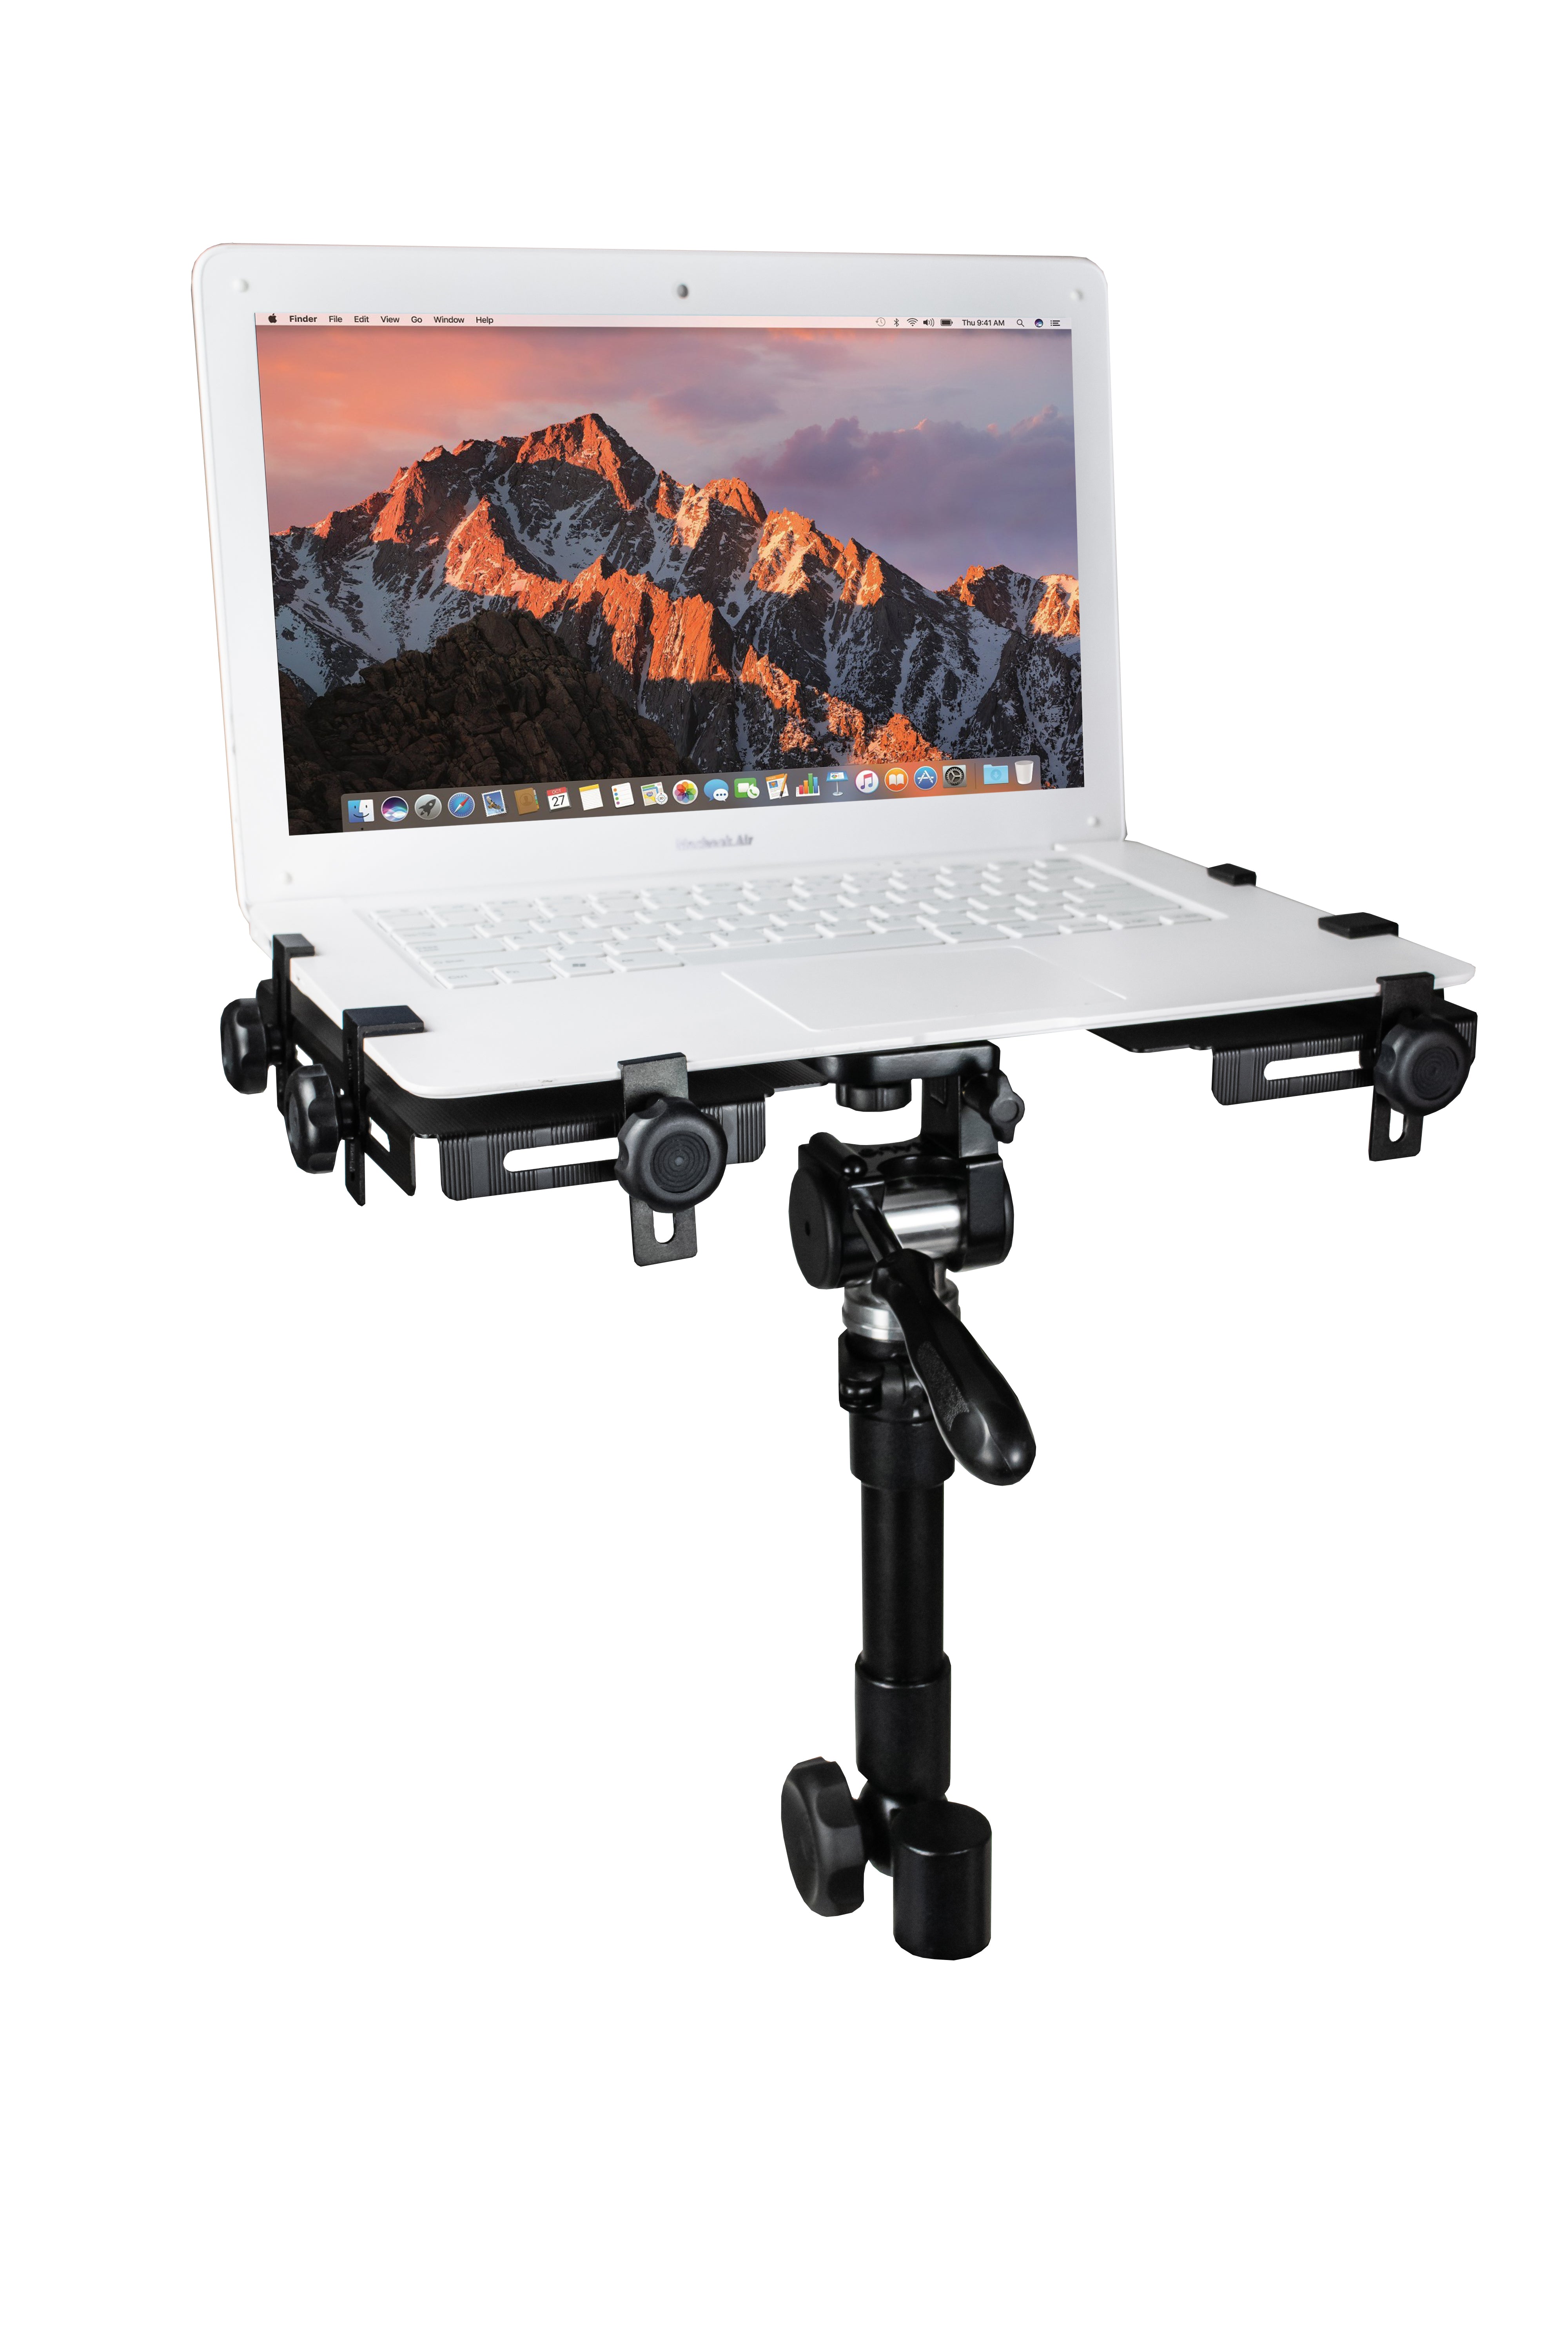 Multi-Flex Vehicle Mount for Laptops